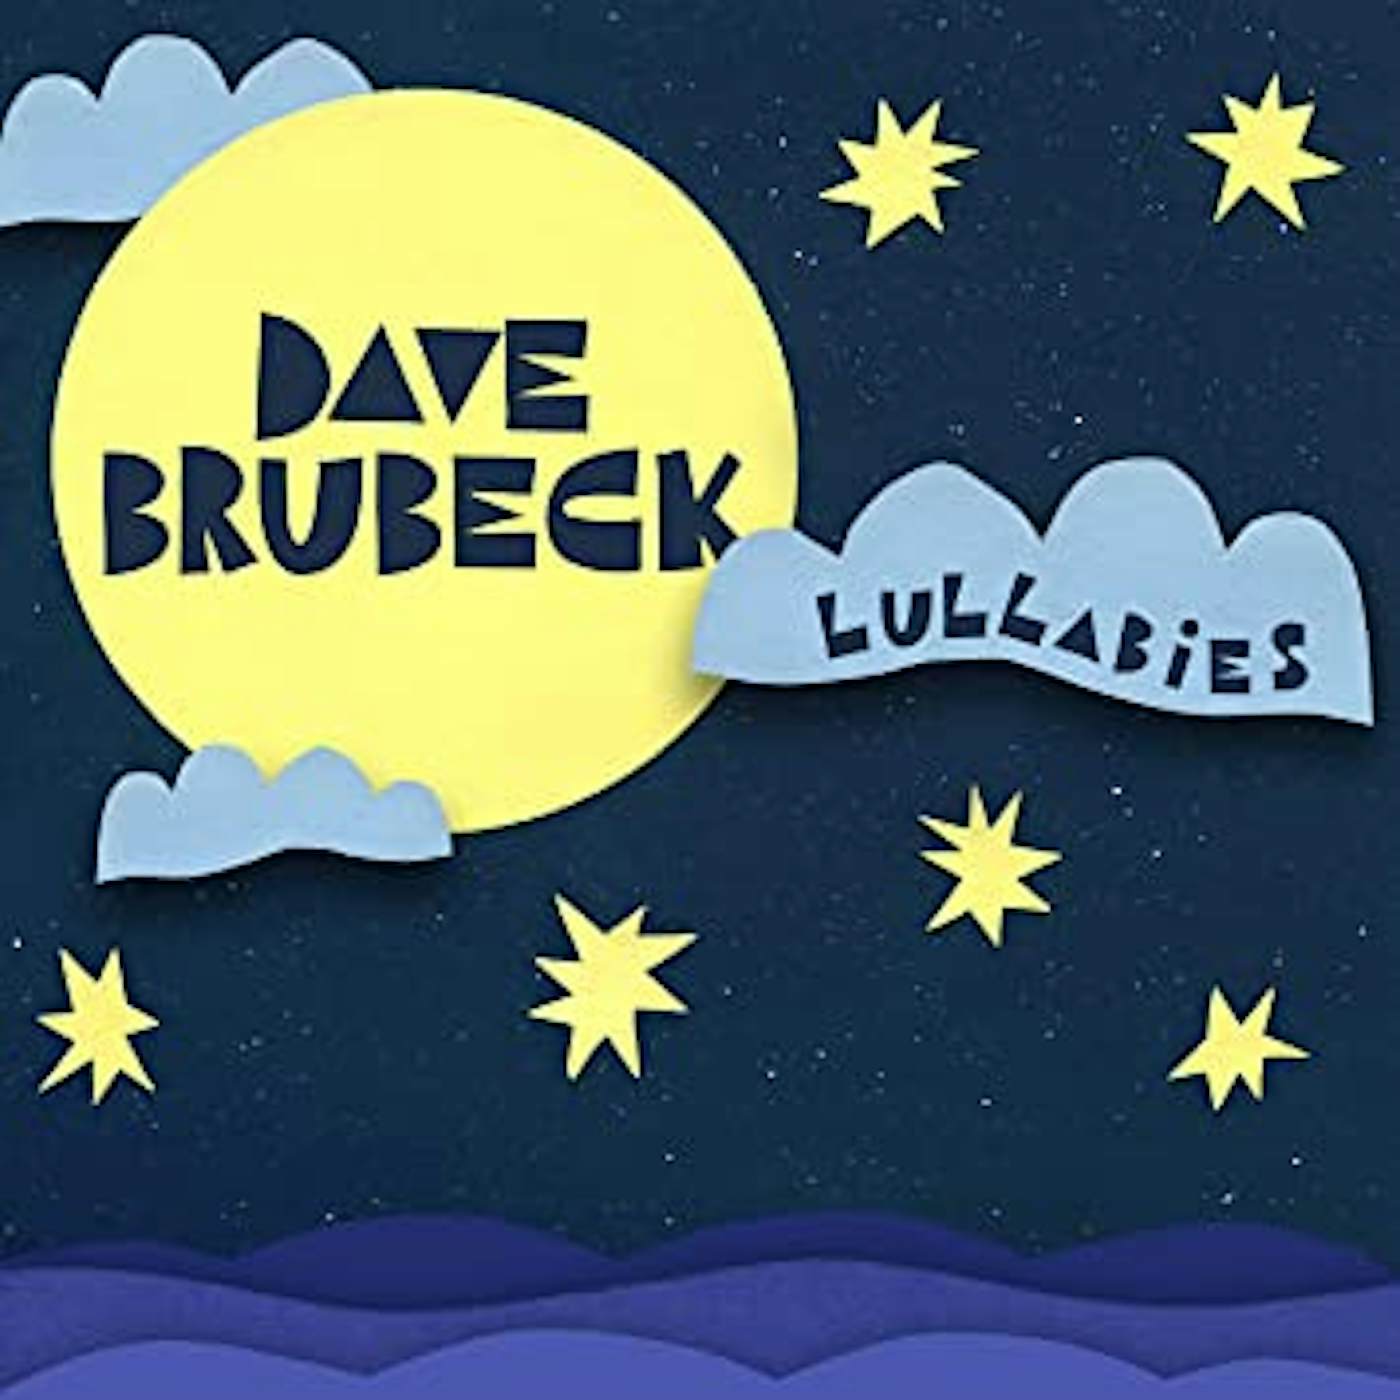 Dave Brubeck LULLABIES CD